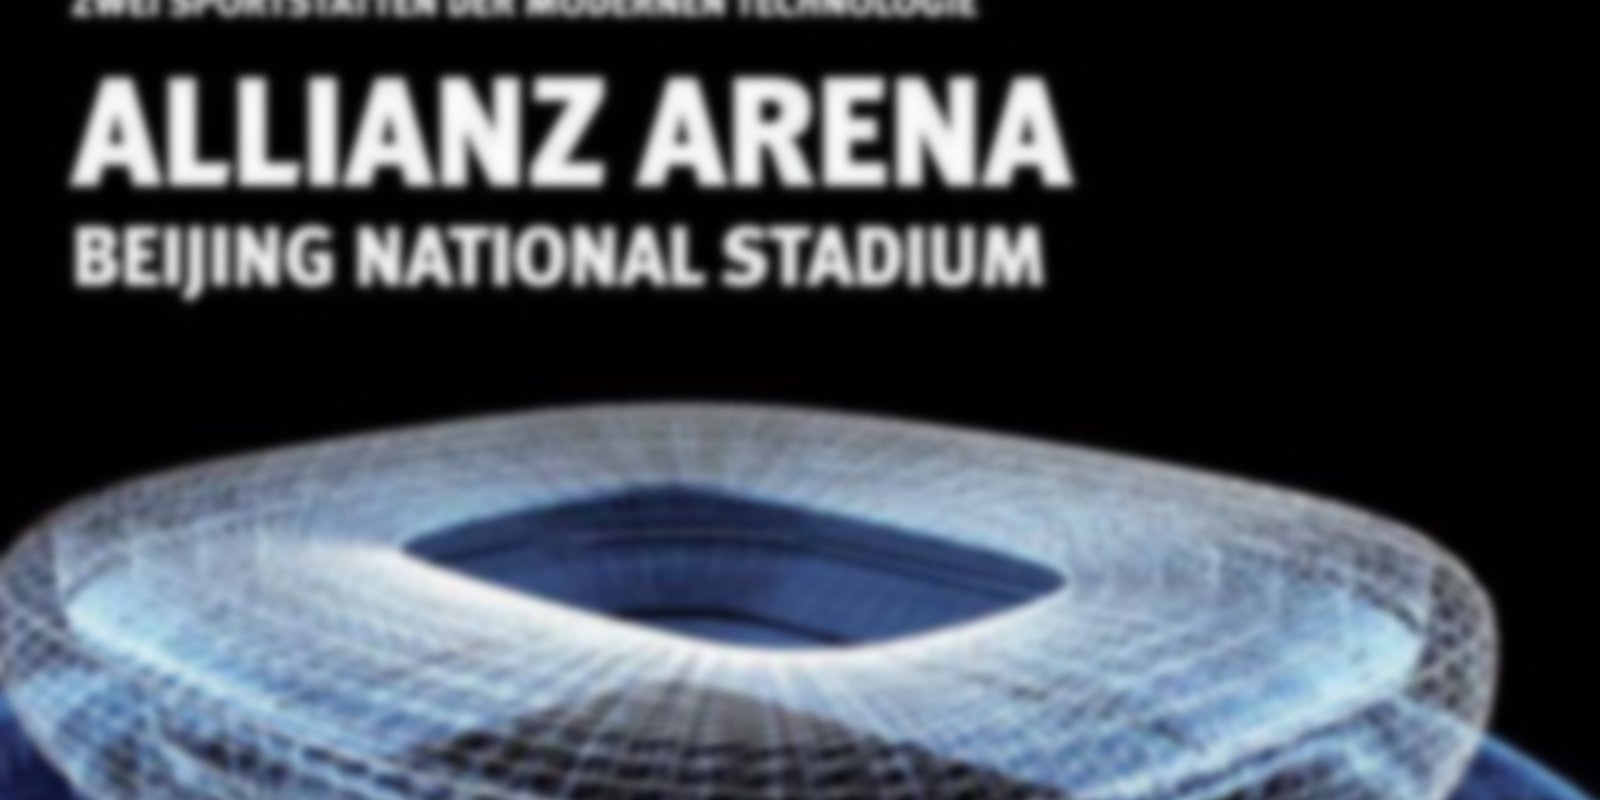 Built for Champions - Allianz Arena / Bejing National Stadium